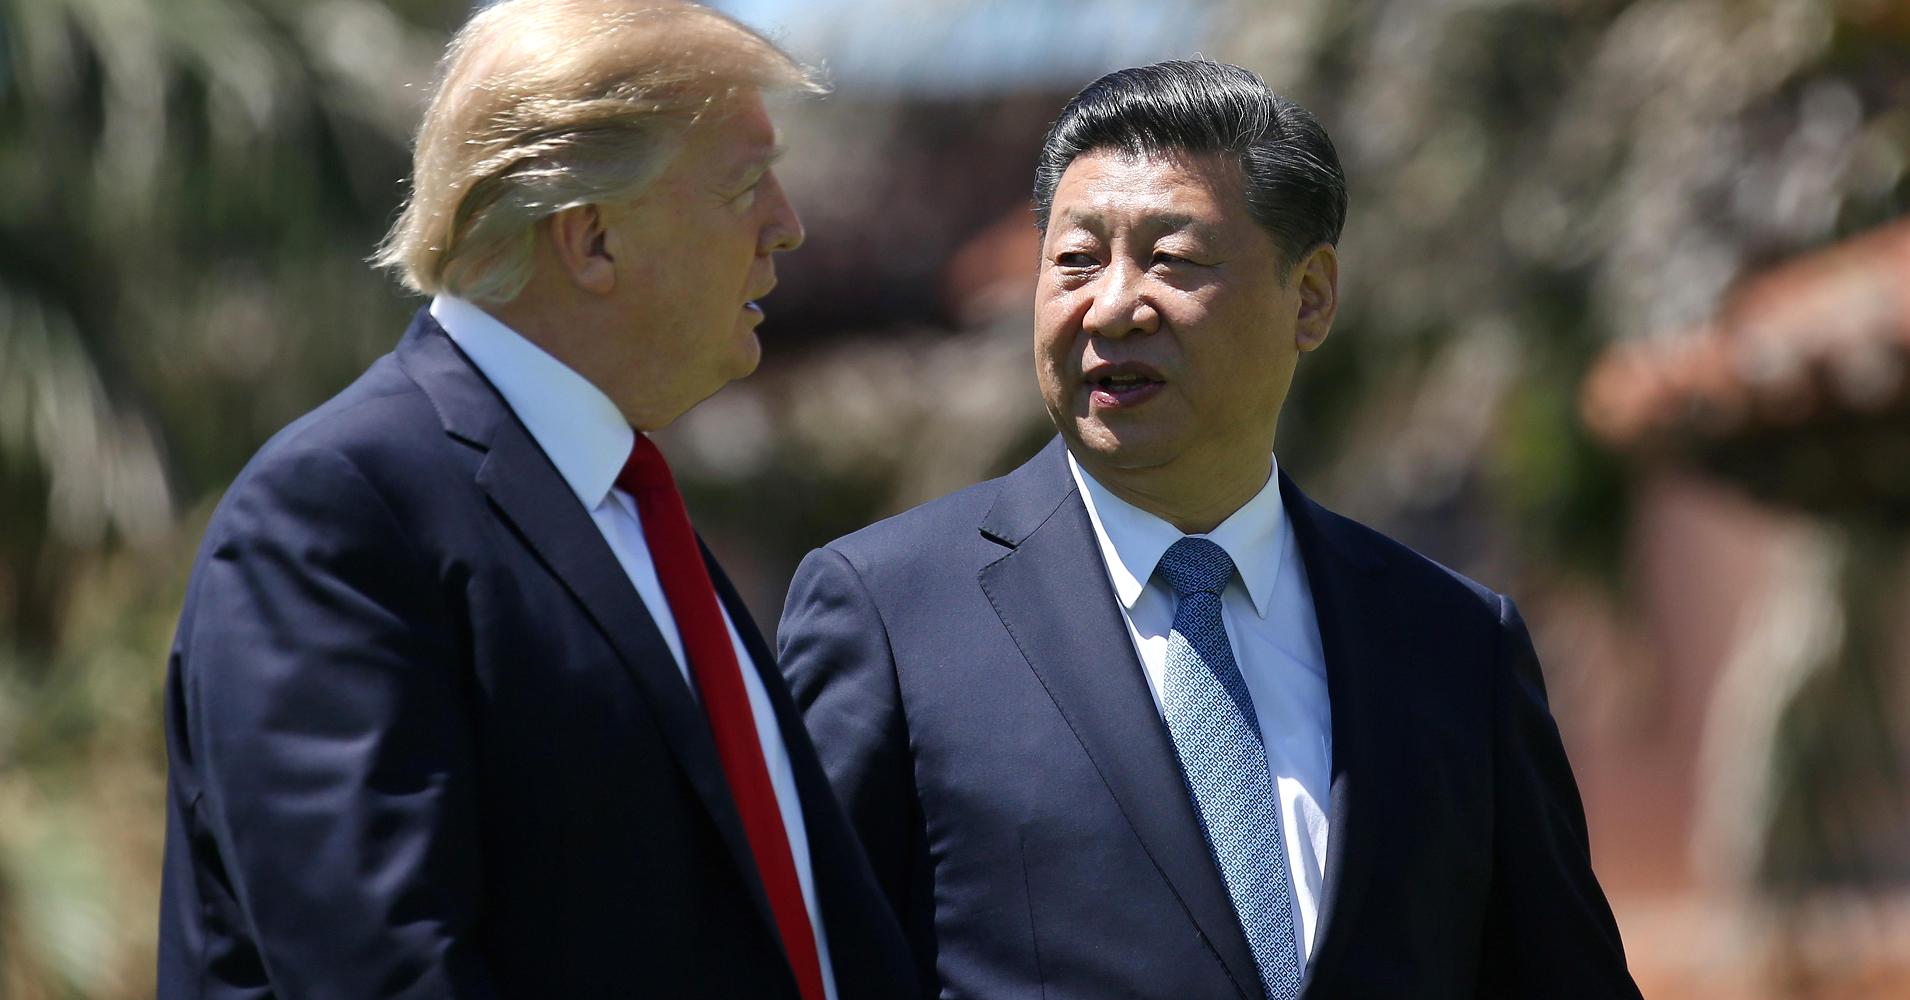 Трамп и си Цзиньпин. Китай попросил